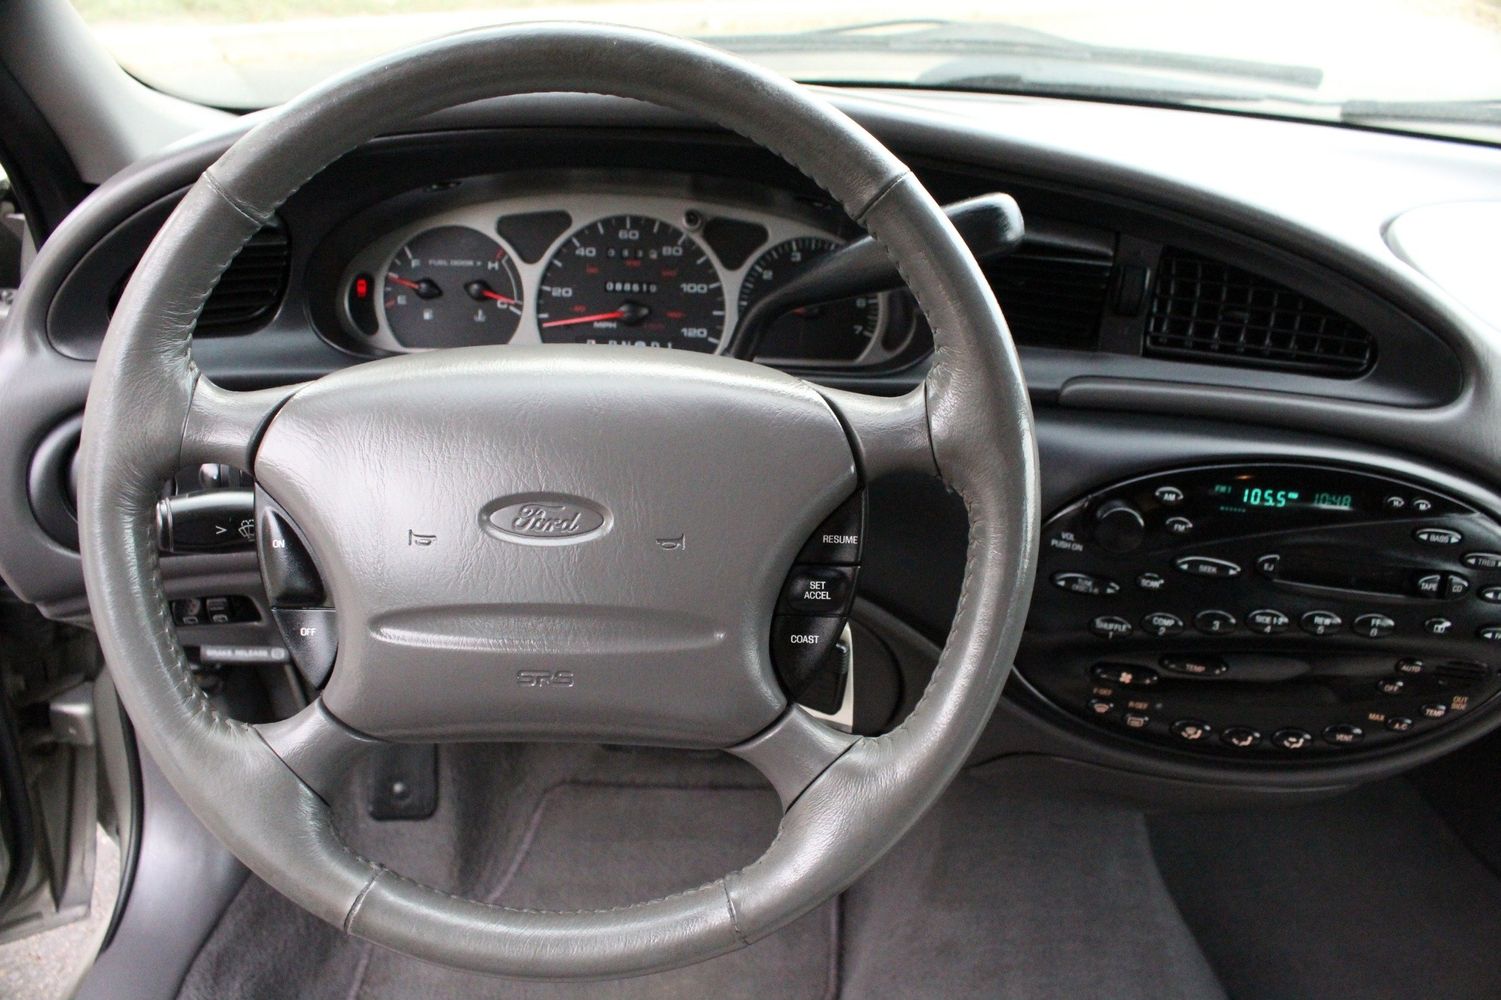 1999 Ford Taurus SE | Victory Motors of Colorado